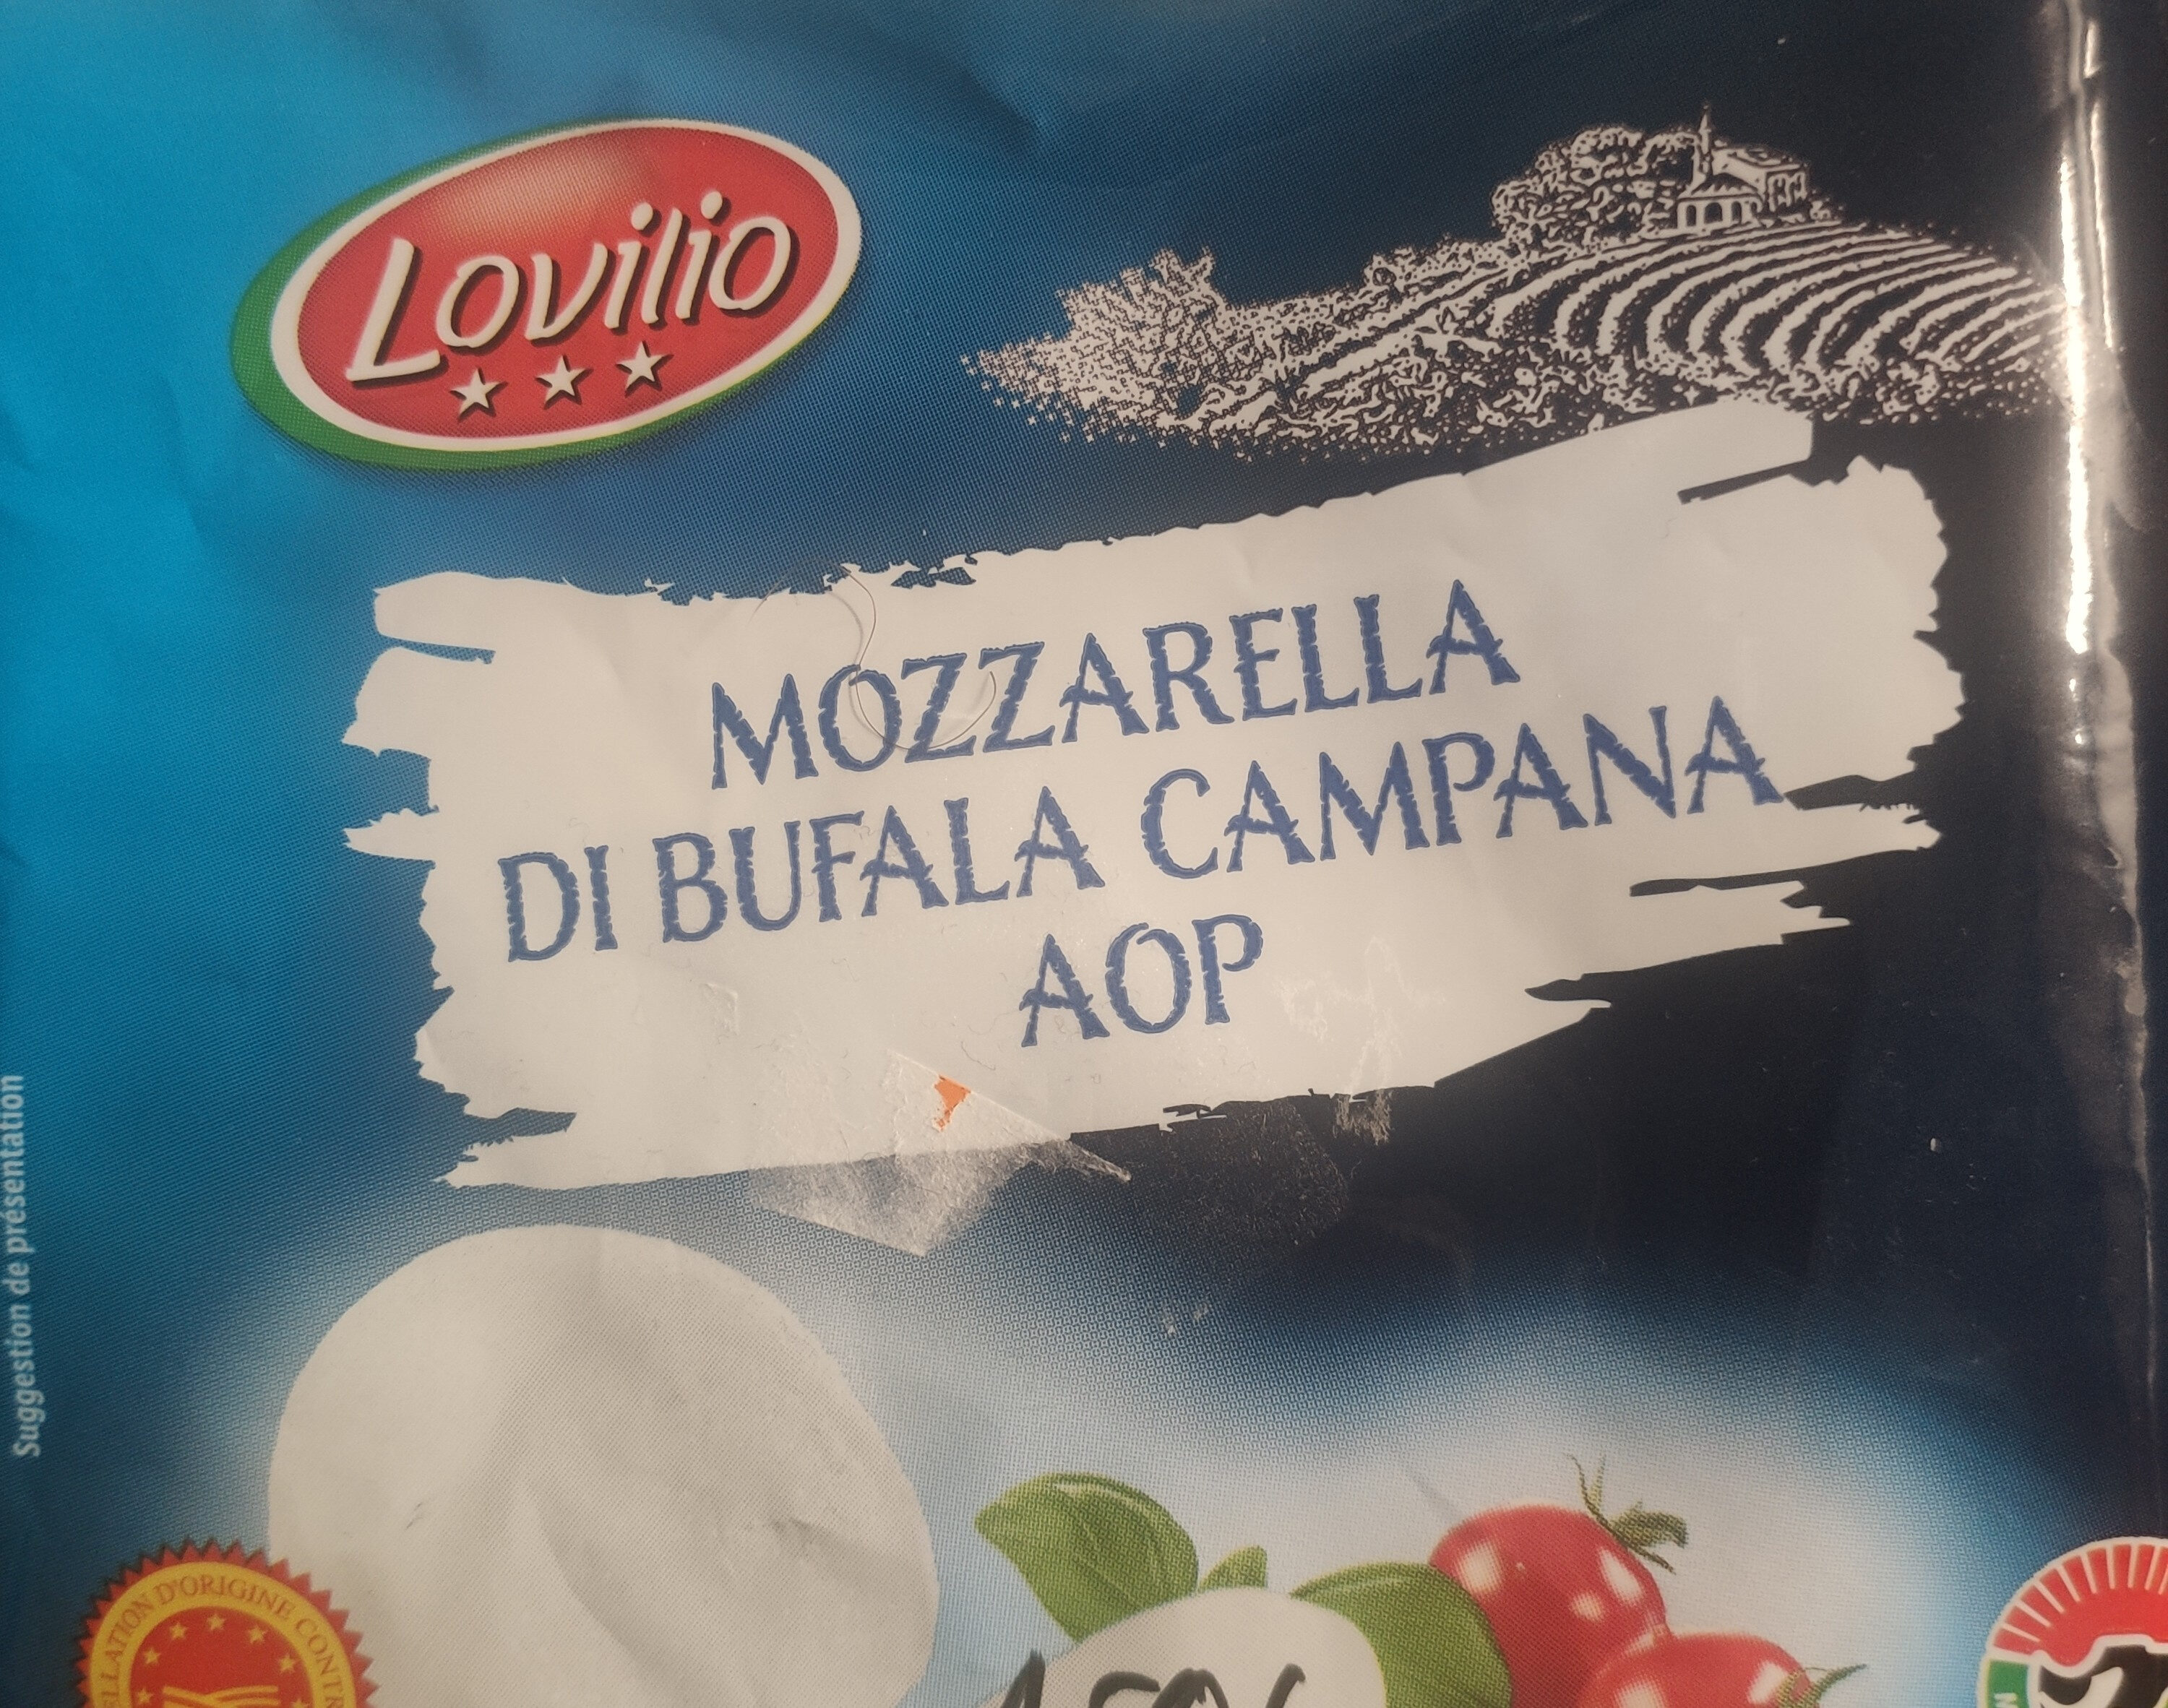 Mozzarella Di Bufala Campana AOP - Product - fr